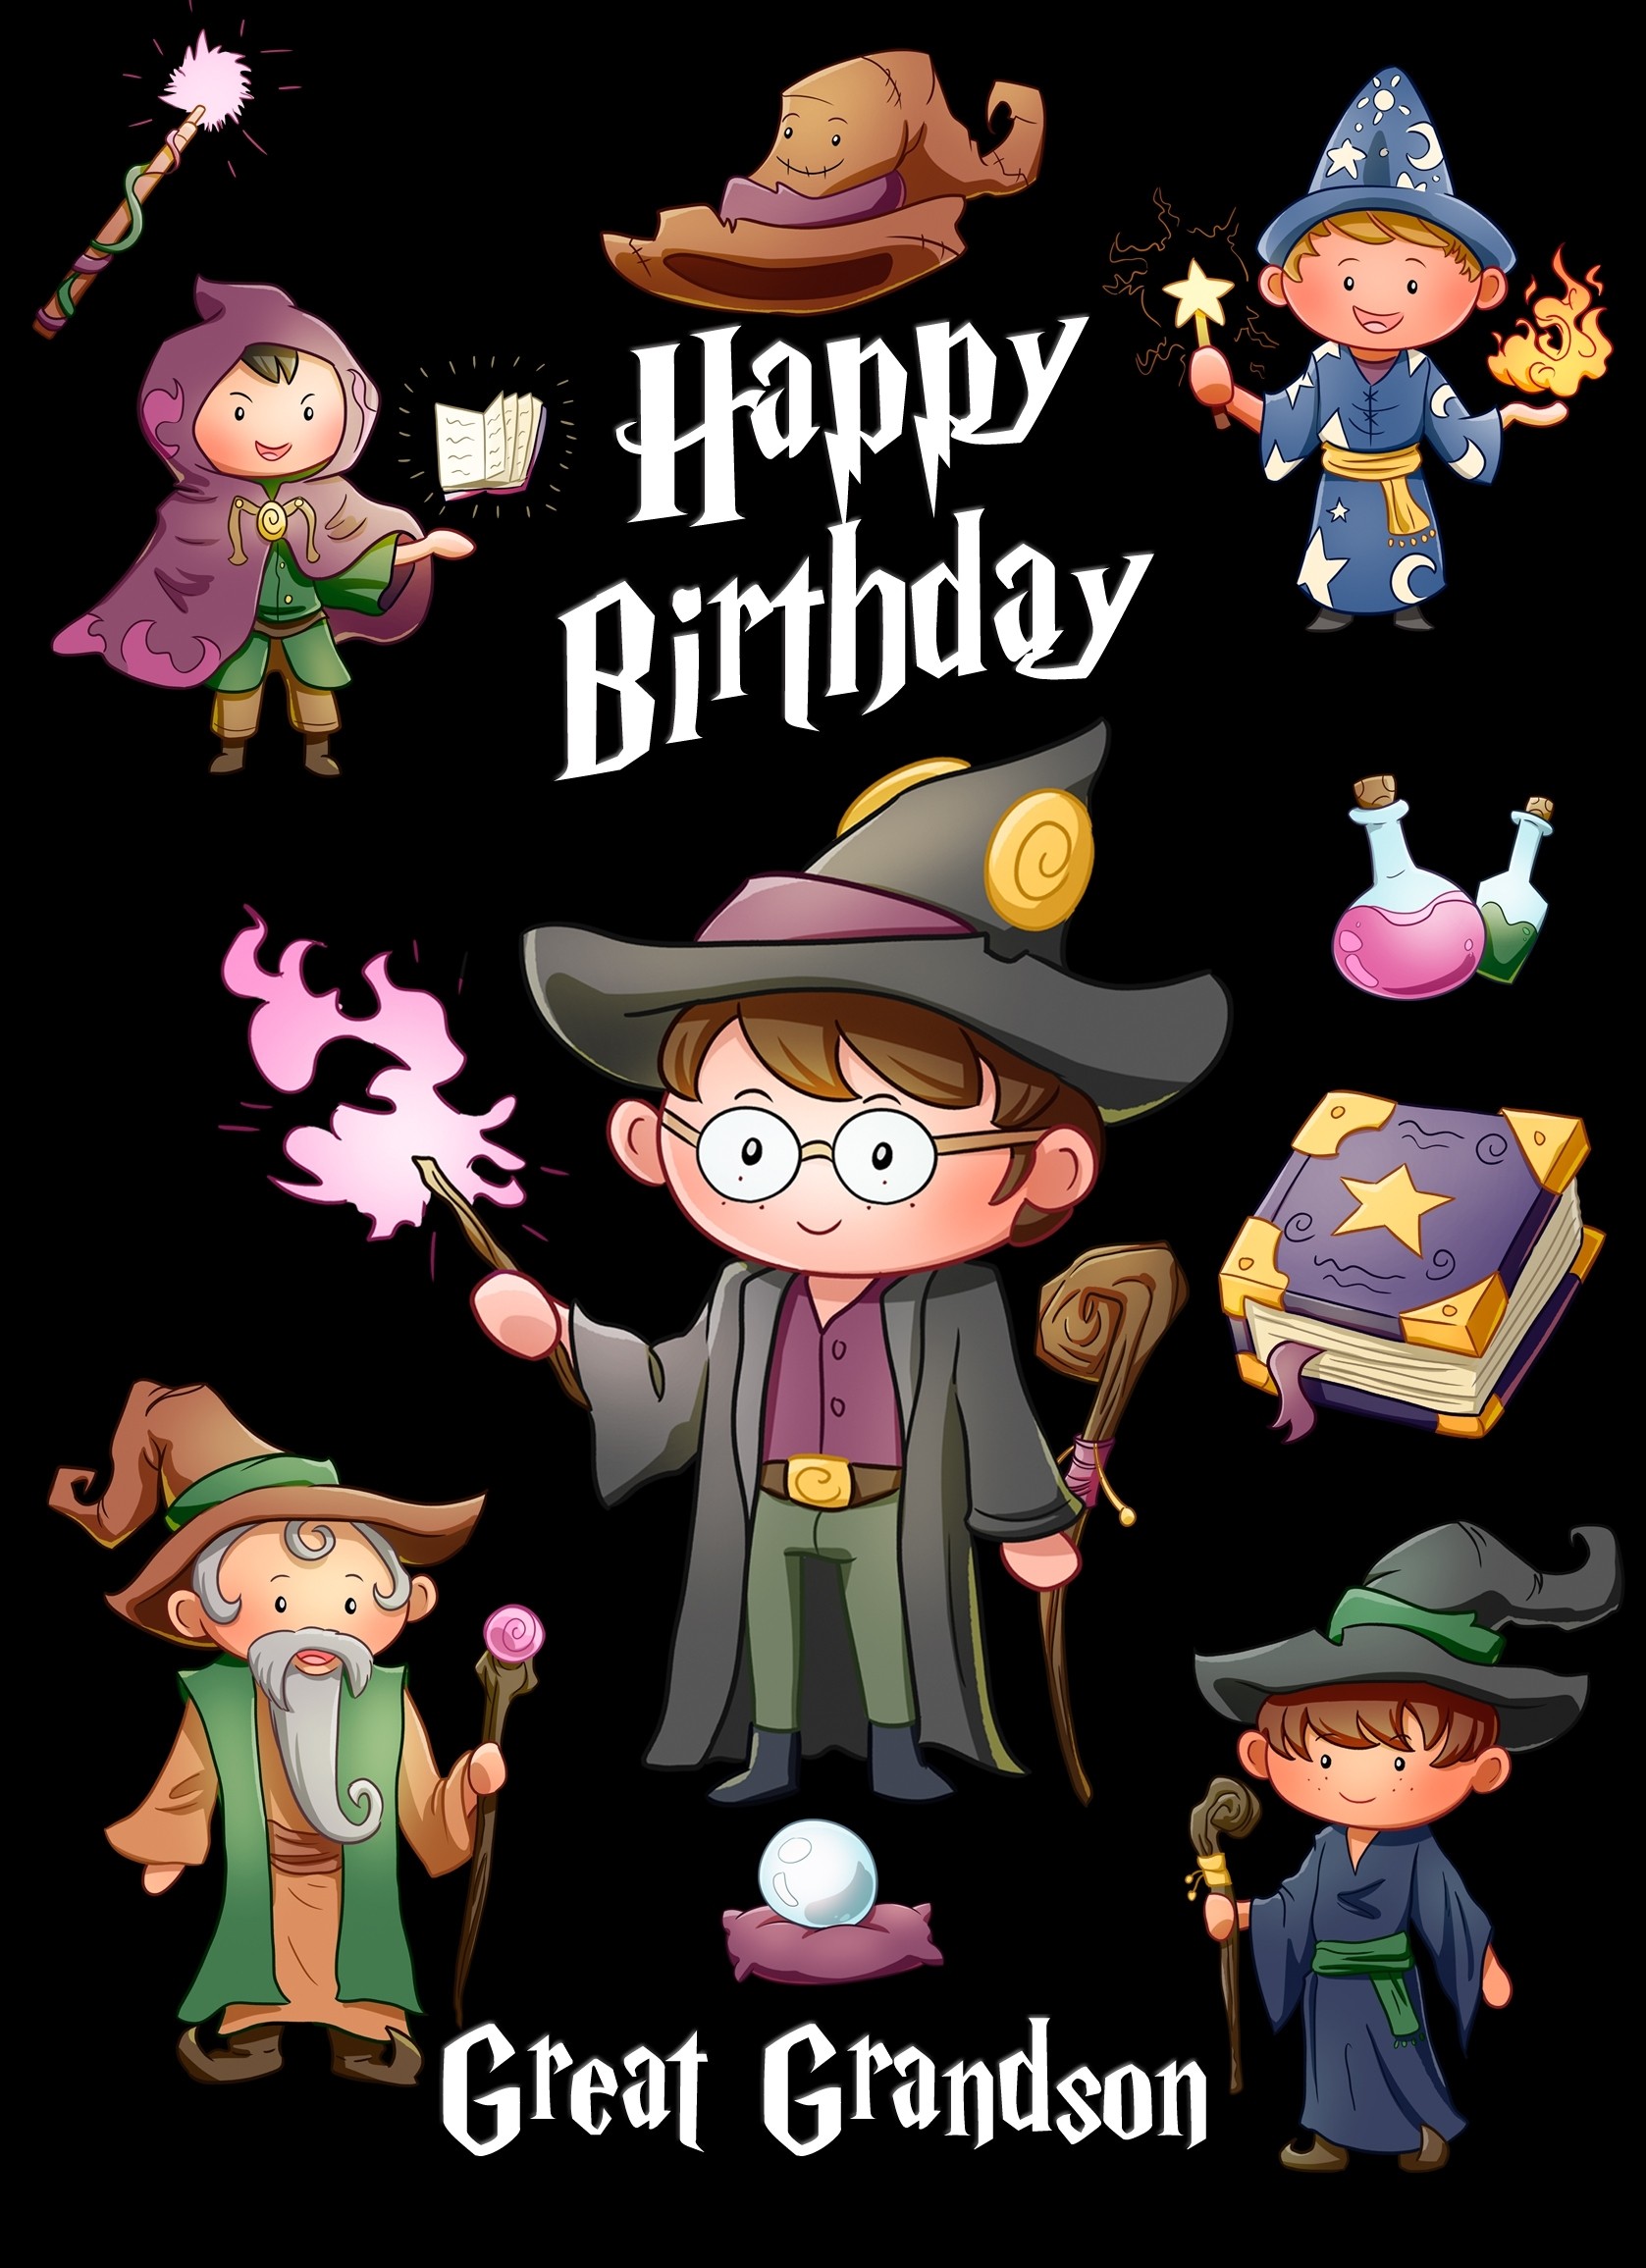 Birthday Card For Great Grandson (Wizard, Cartoon)